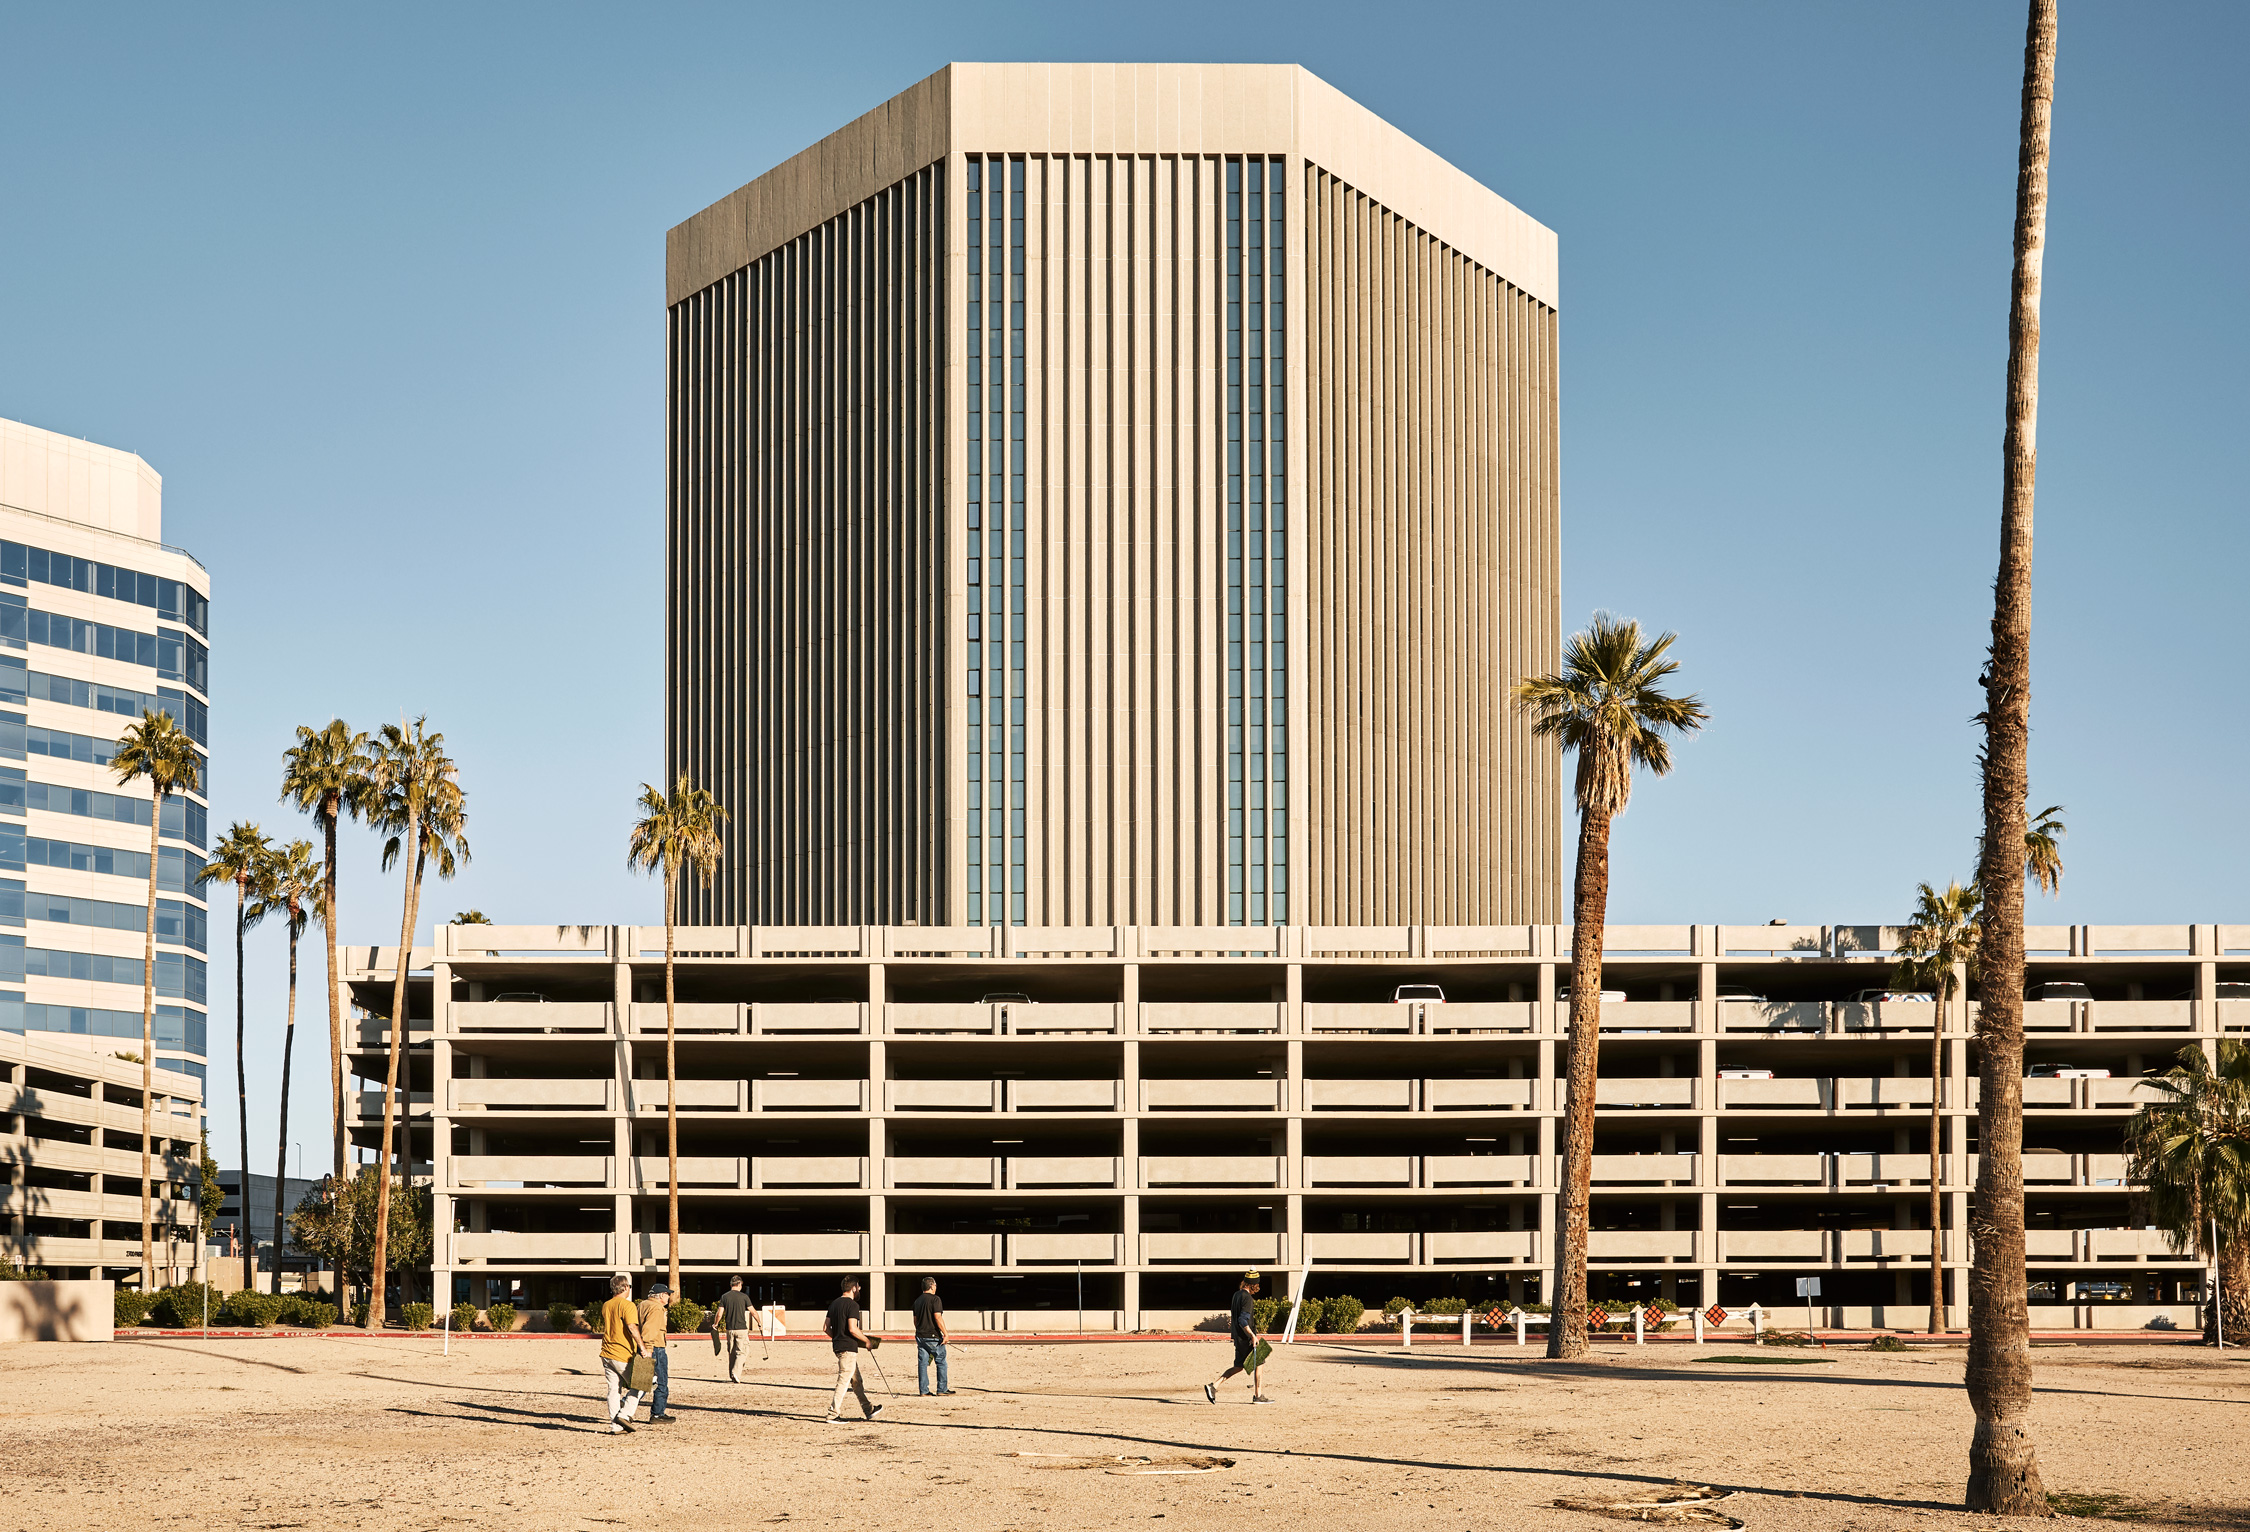 TERRENO BALDÍO - Stephen Denton Photography, Los Angeles, California based Architectural, Hospitality, & Aerial Photographer 